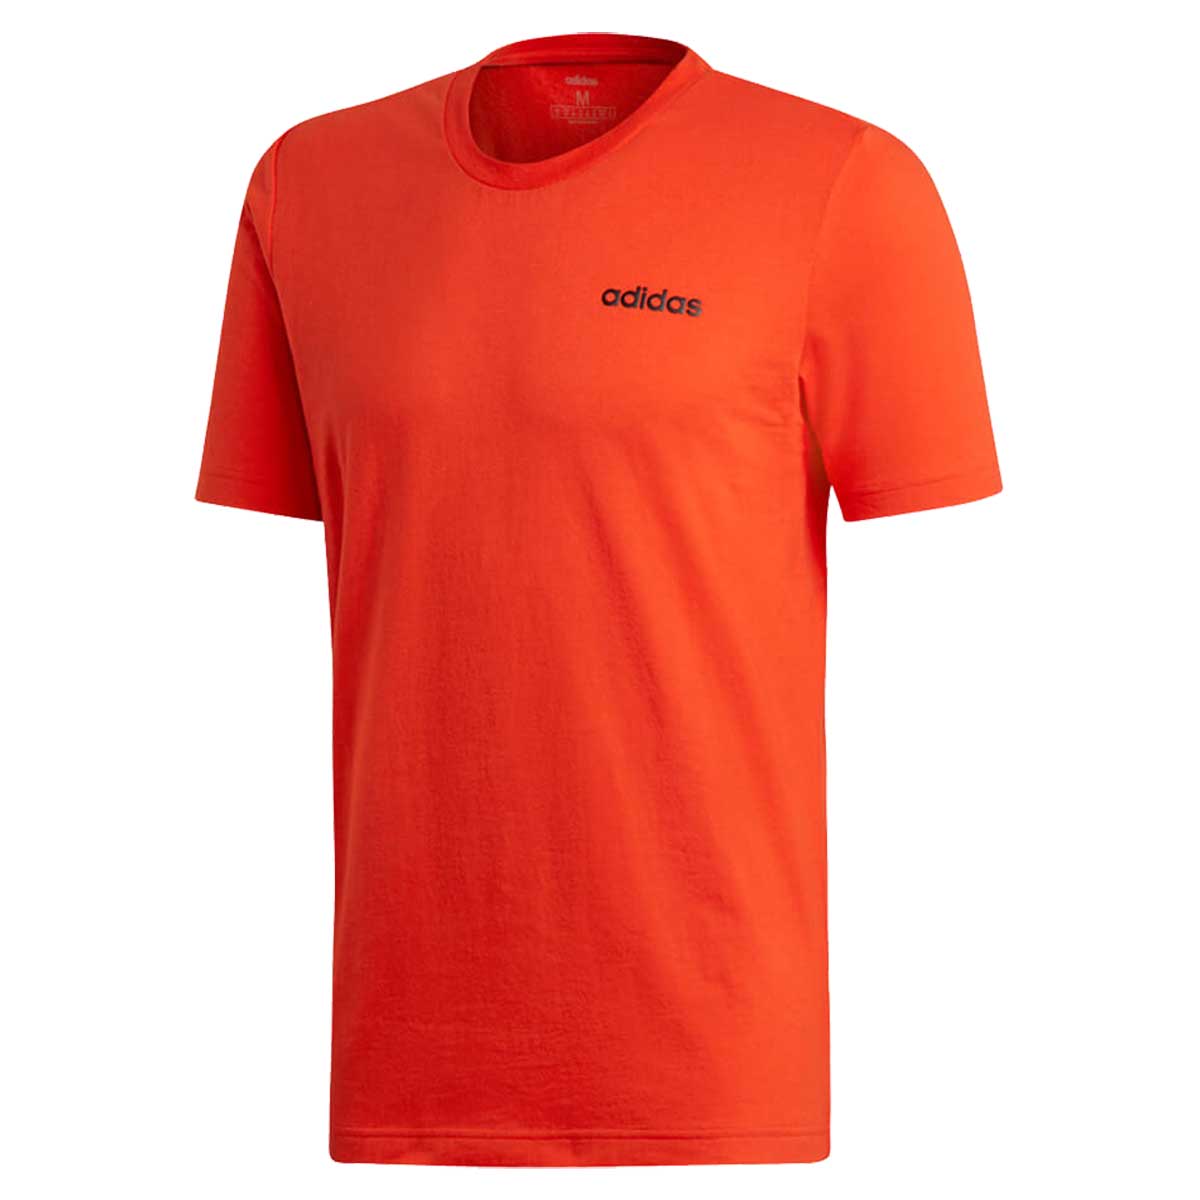 Adidas Essentials Plain Mens T-Shirt (Red) Online India